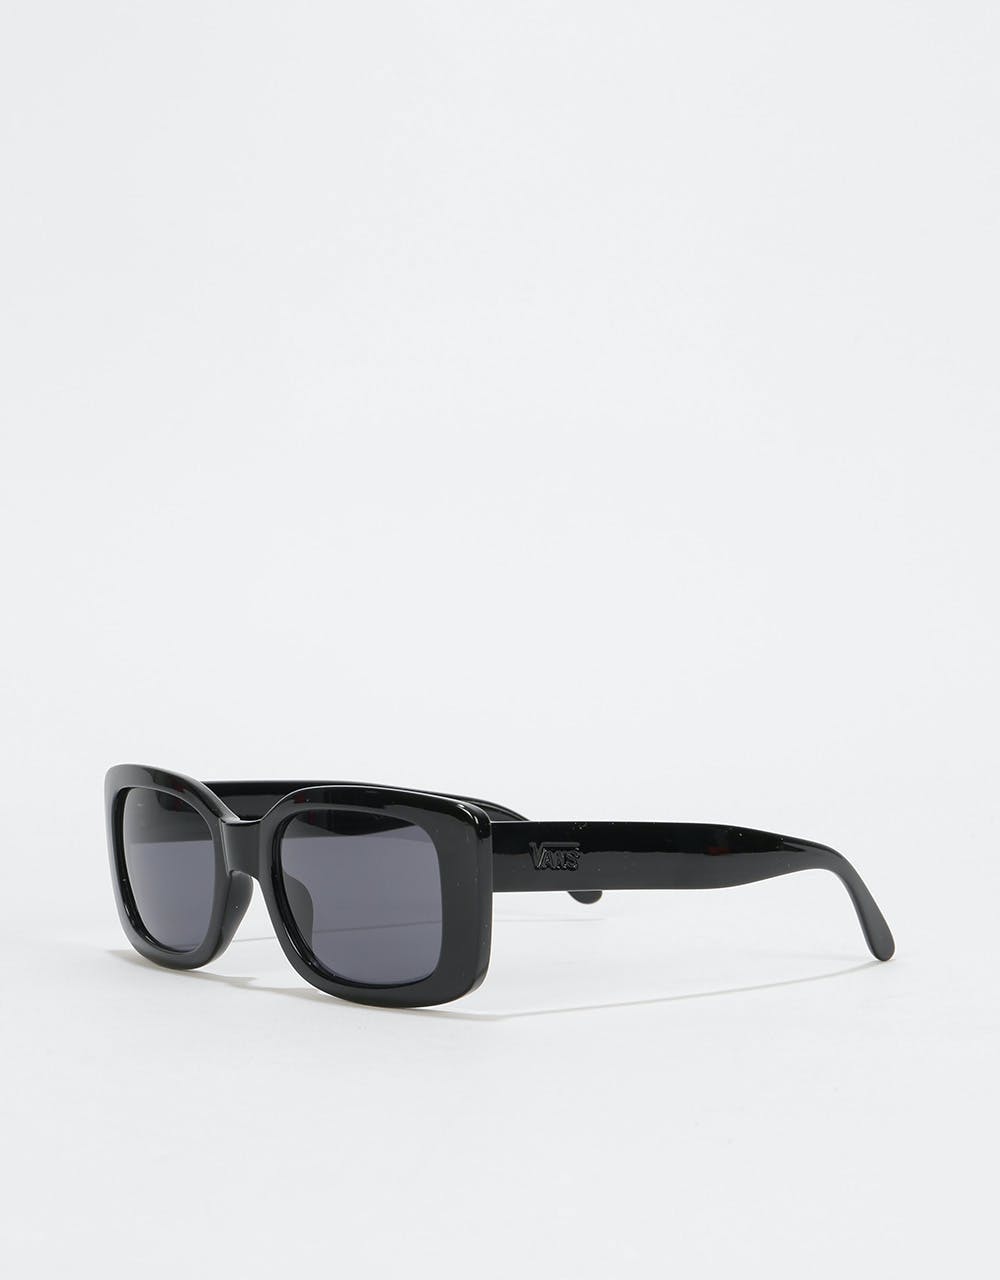 Vans Keech Sunglasses - Black-Dark Smoke